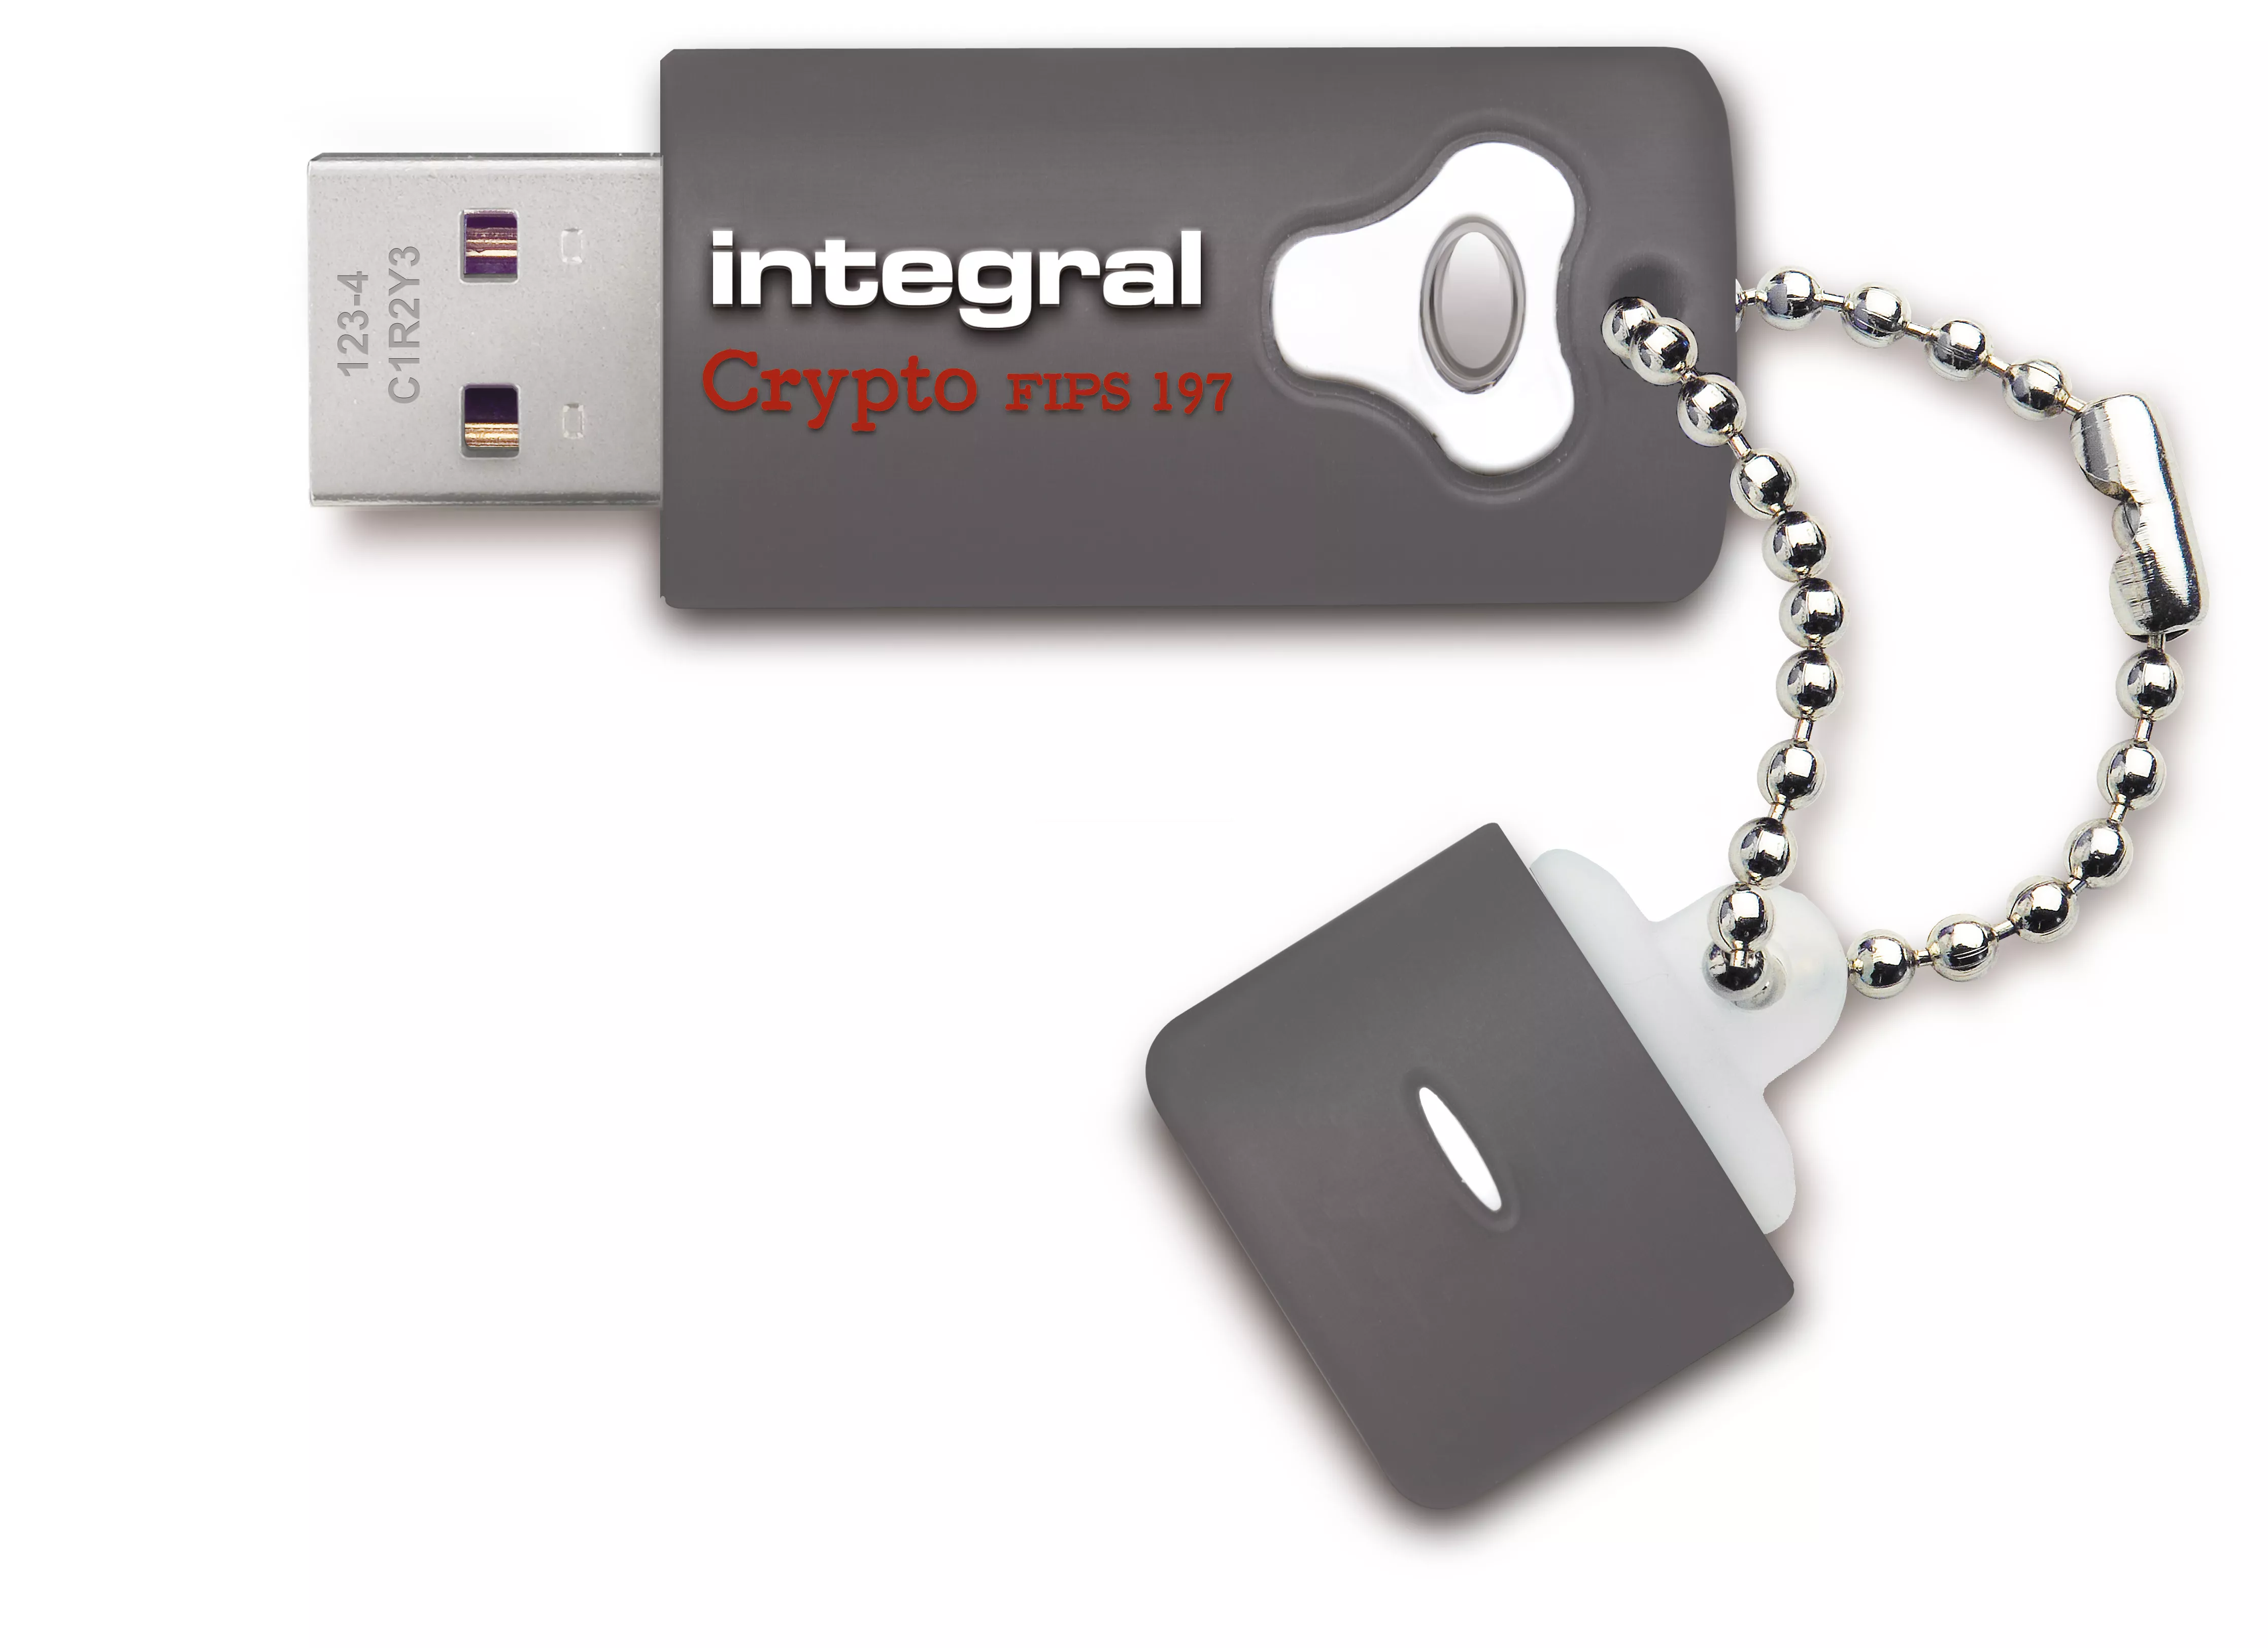 Vente Integral 16GB Crypto Drive FIPS 197 Encrypted USB 3.0 au meilleur prix